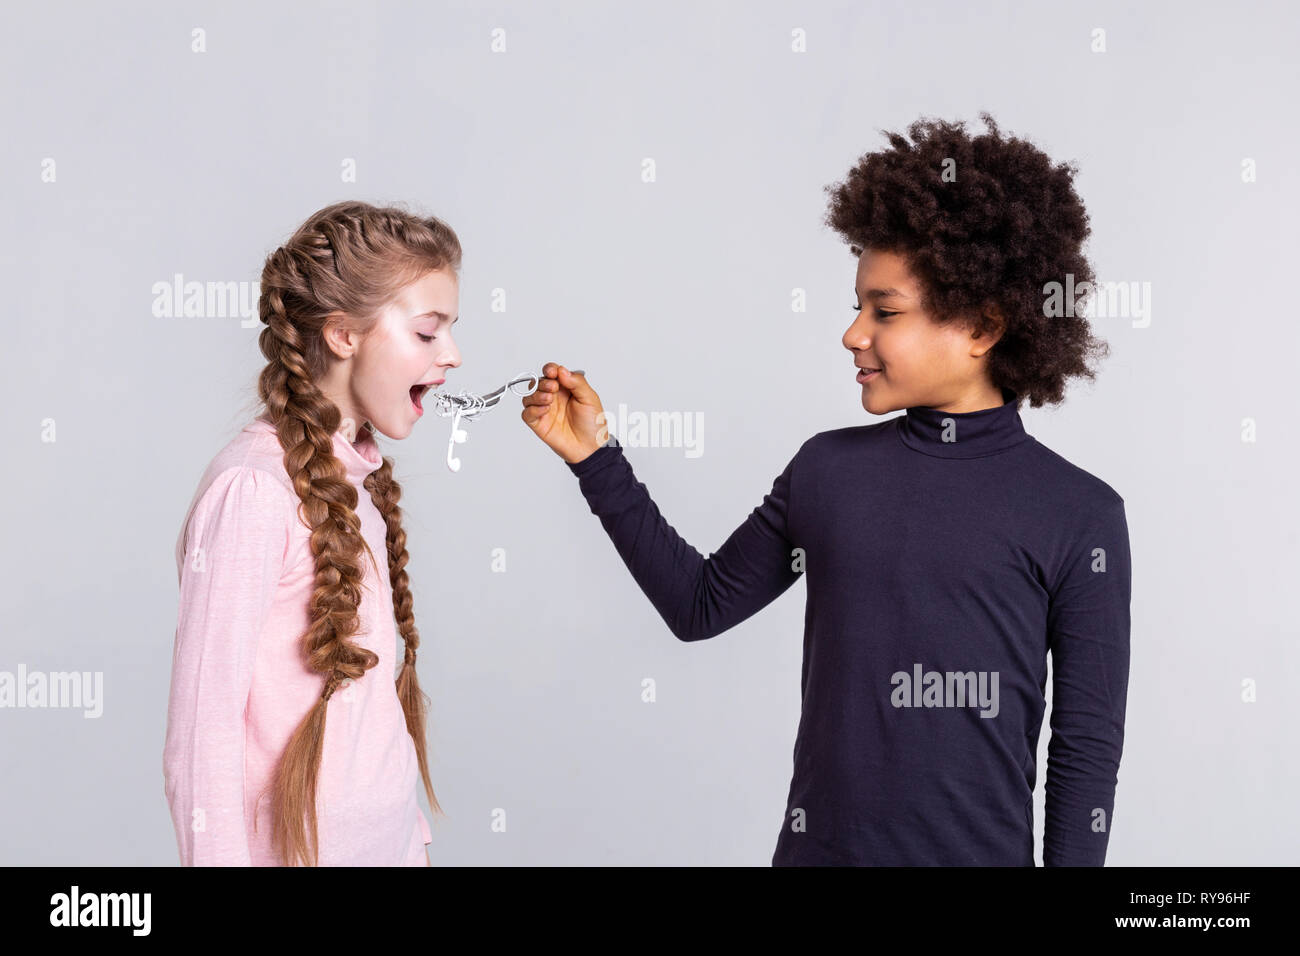 Resolute boy with wild hair feeding his girlfriend with headphones Stock Photo